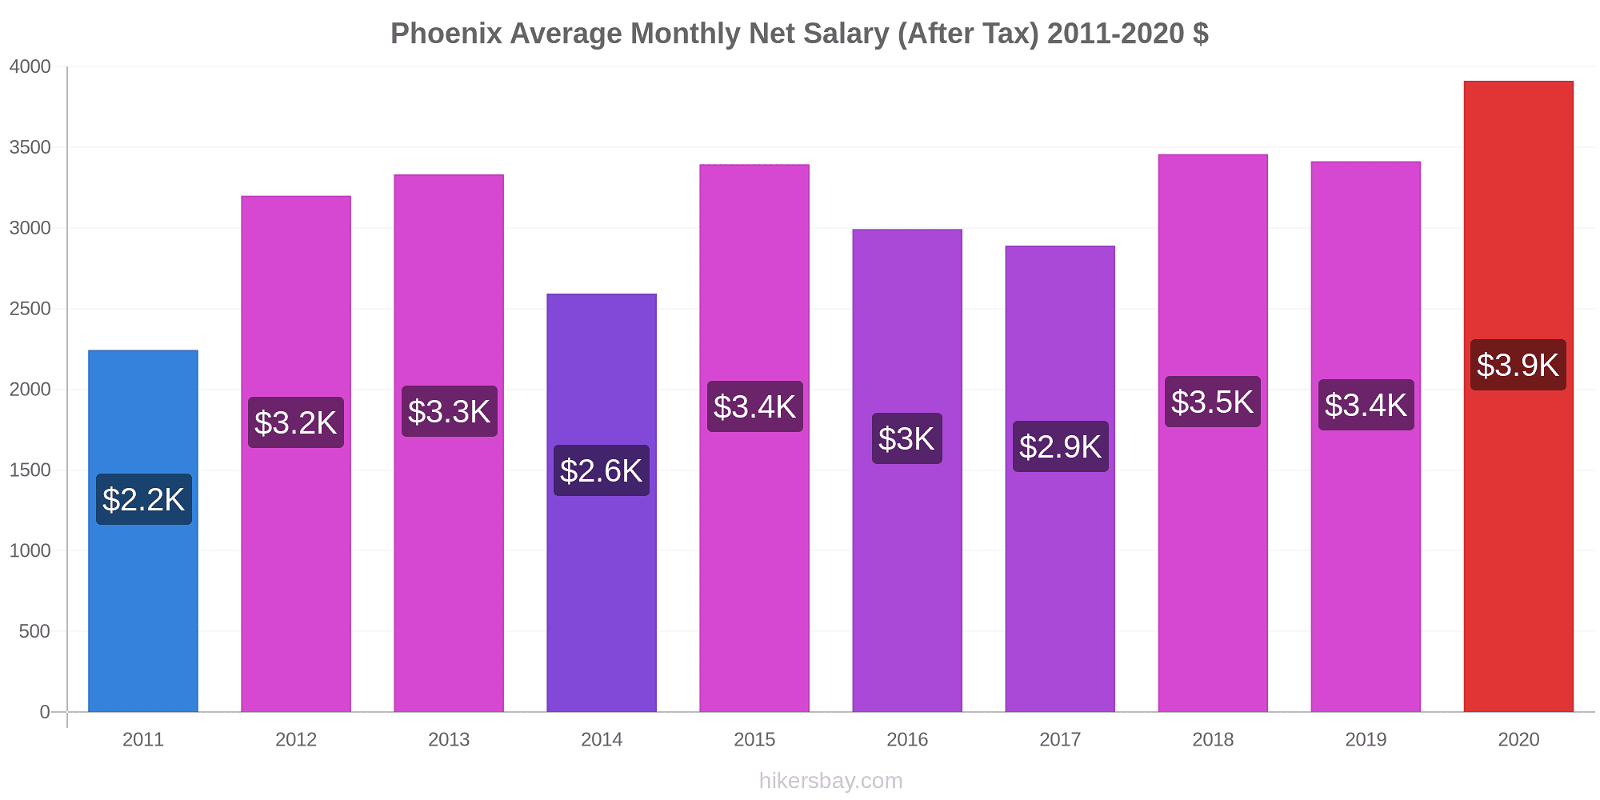 Phoenix price changes Average Monthly Net Salary (After Tax) hikersbay.com